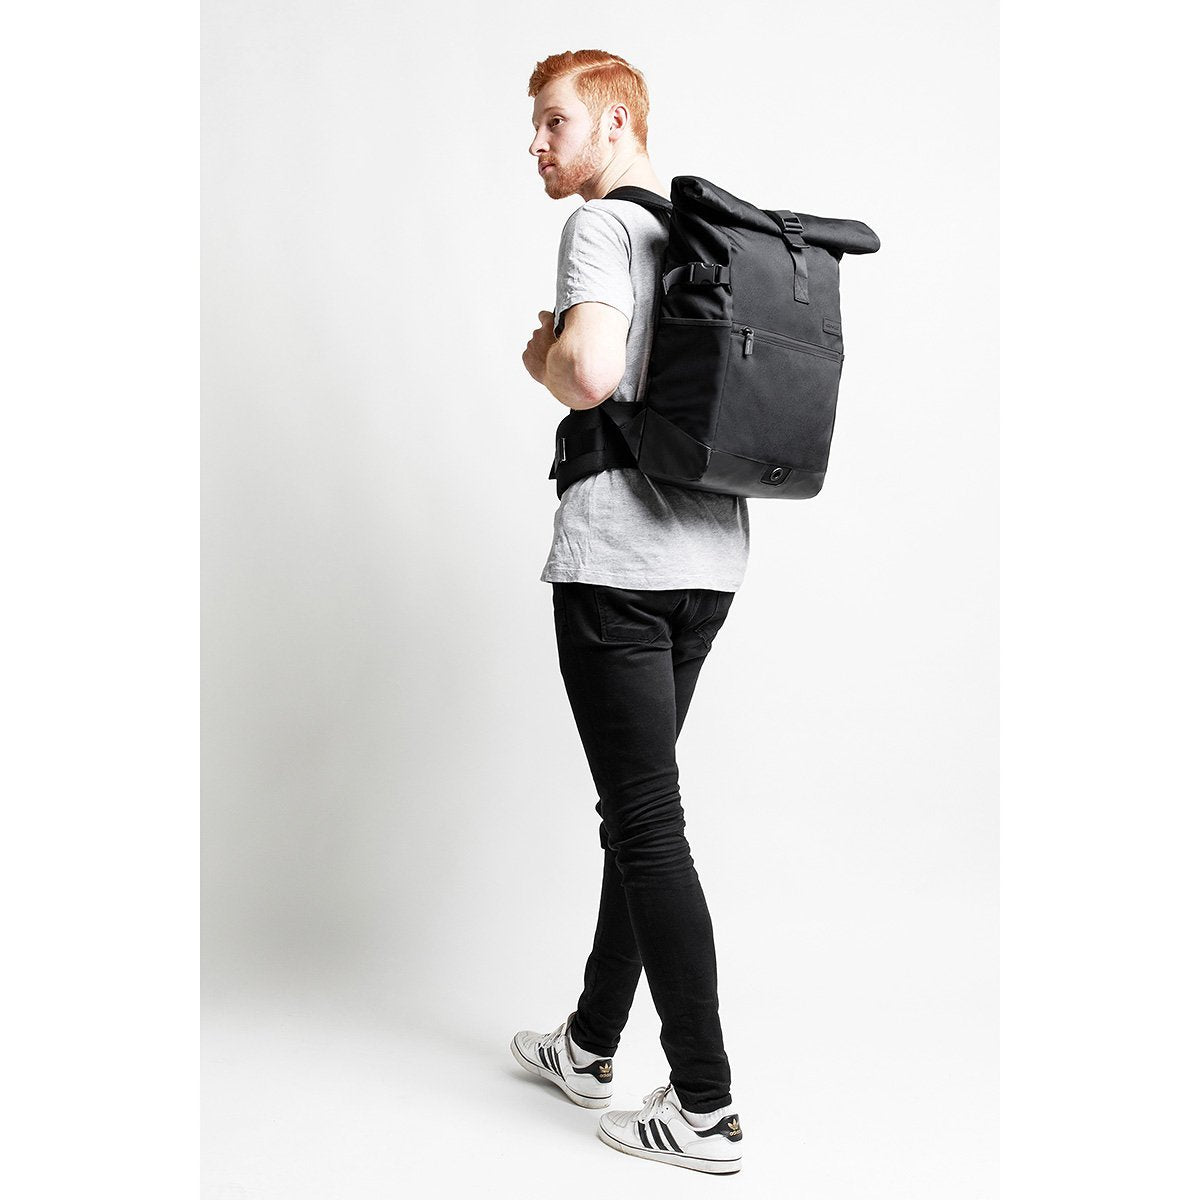 Crumpler Creator's Road Mentor Backpack - #product-type#